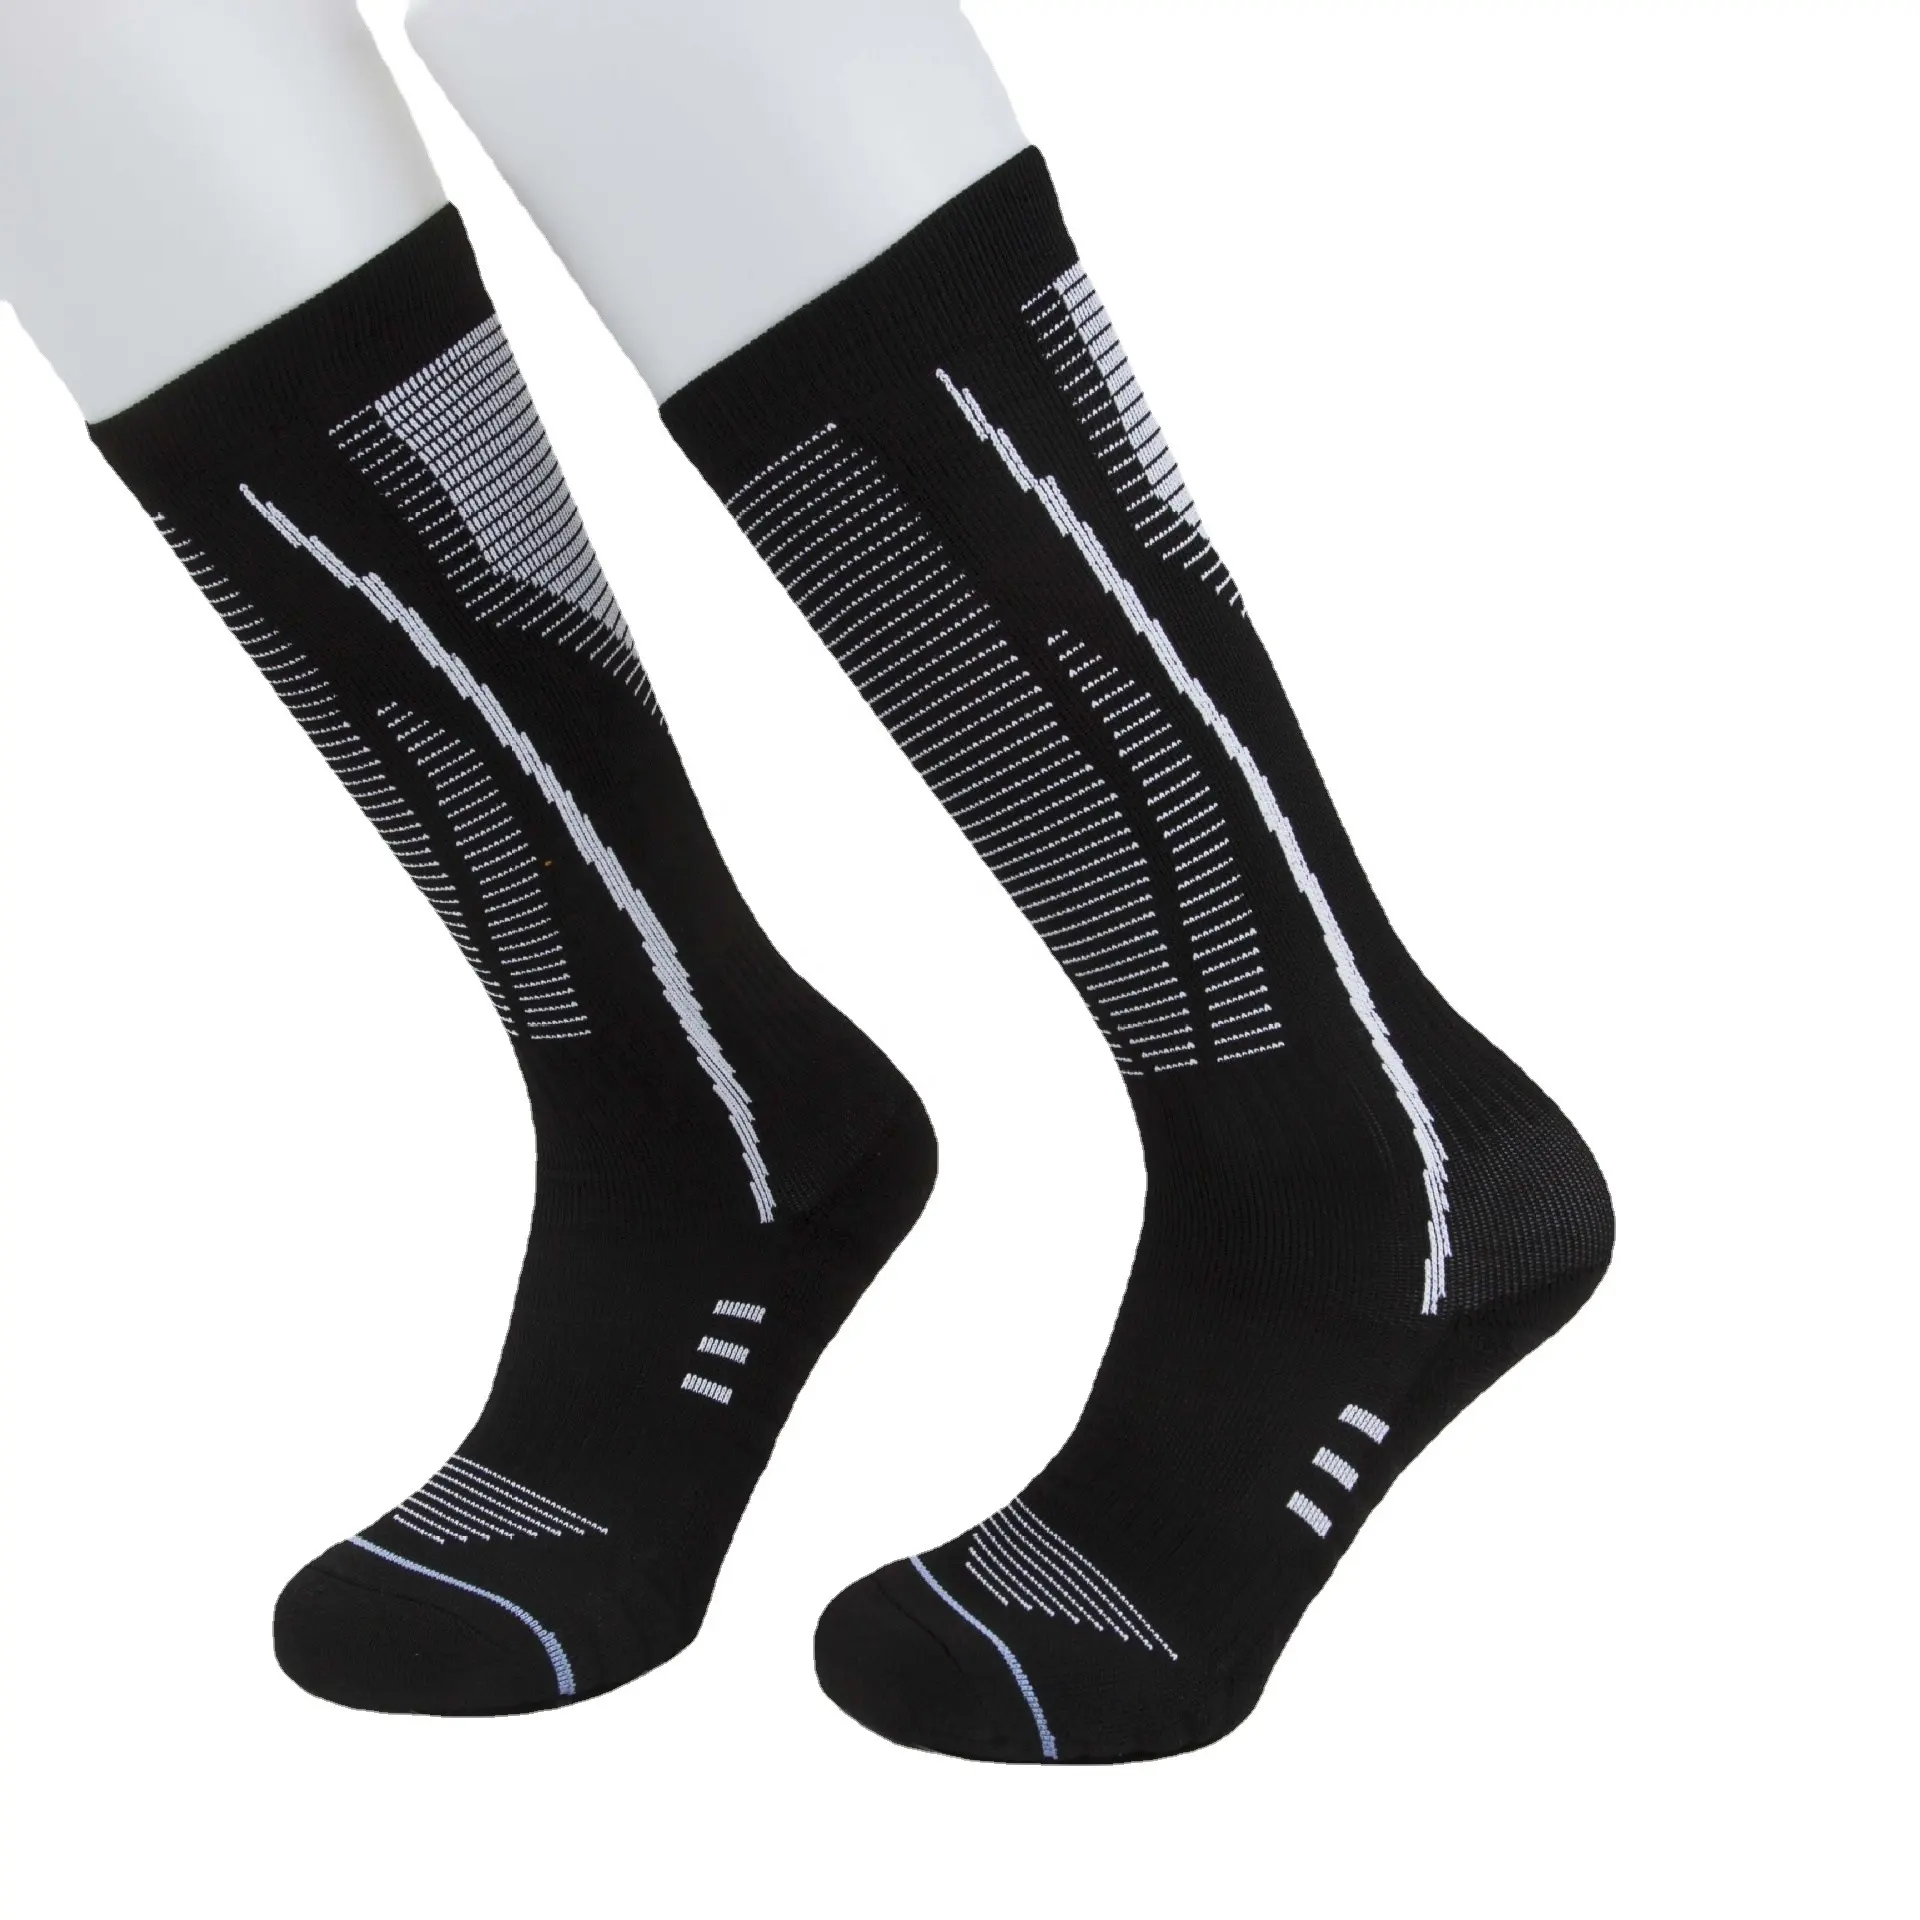 high custom 20-30 mmhg compression sport quarter coolmax men's compression sport fitness socks